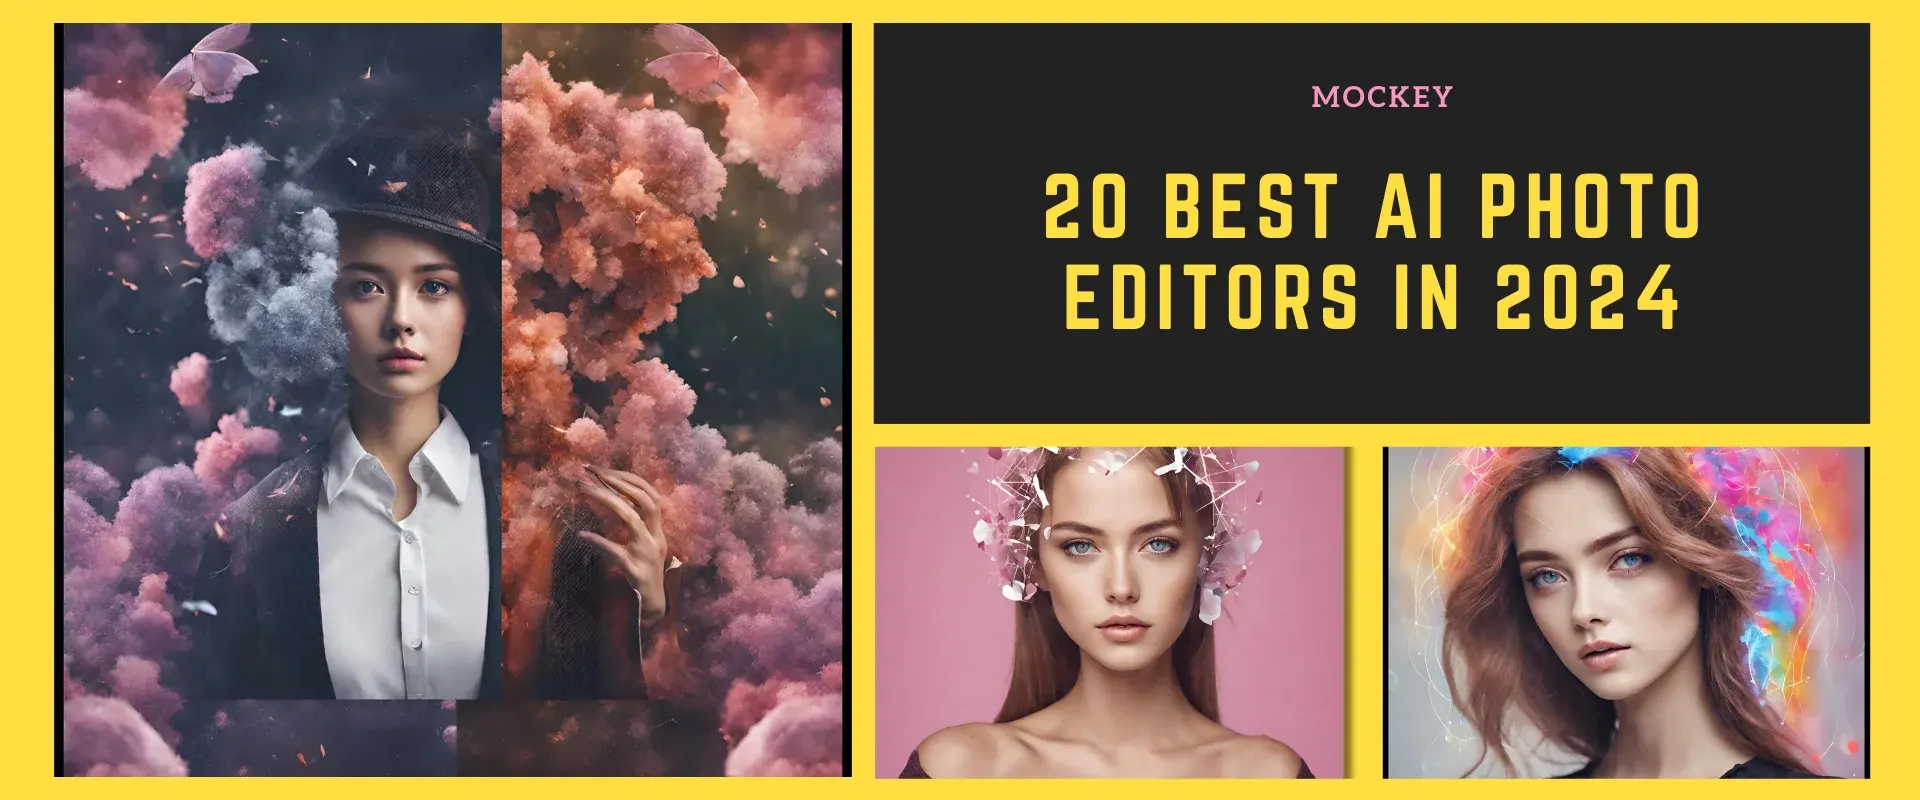 20 Best AI Photo Editors in 2024